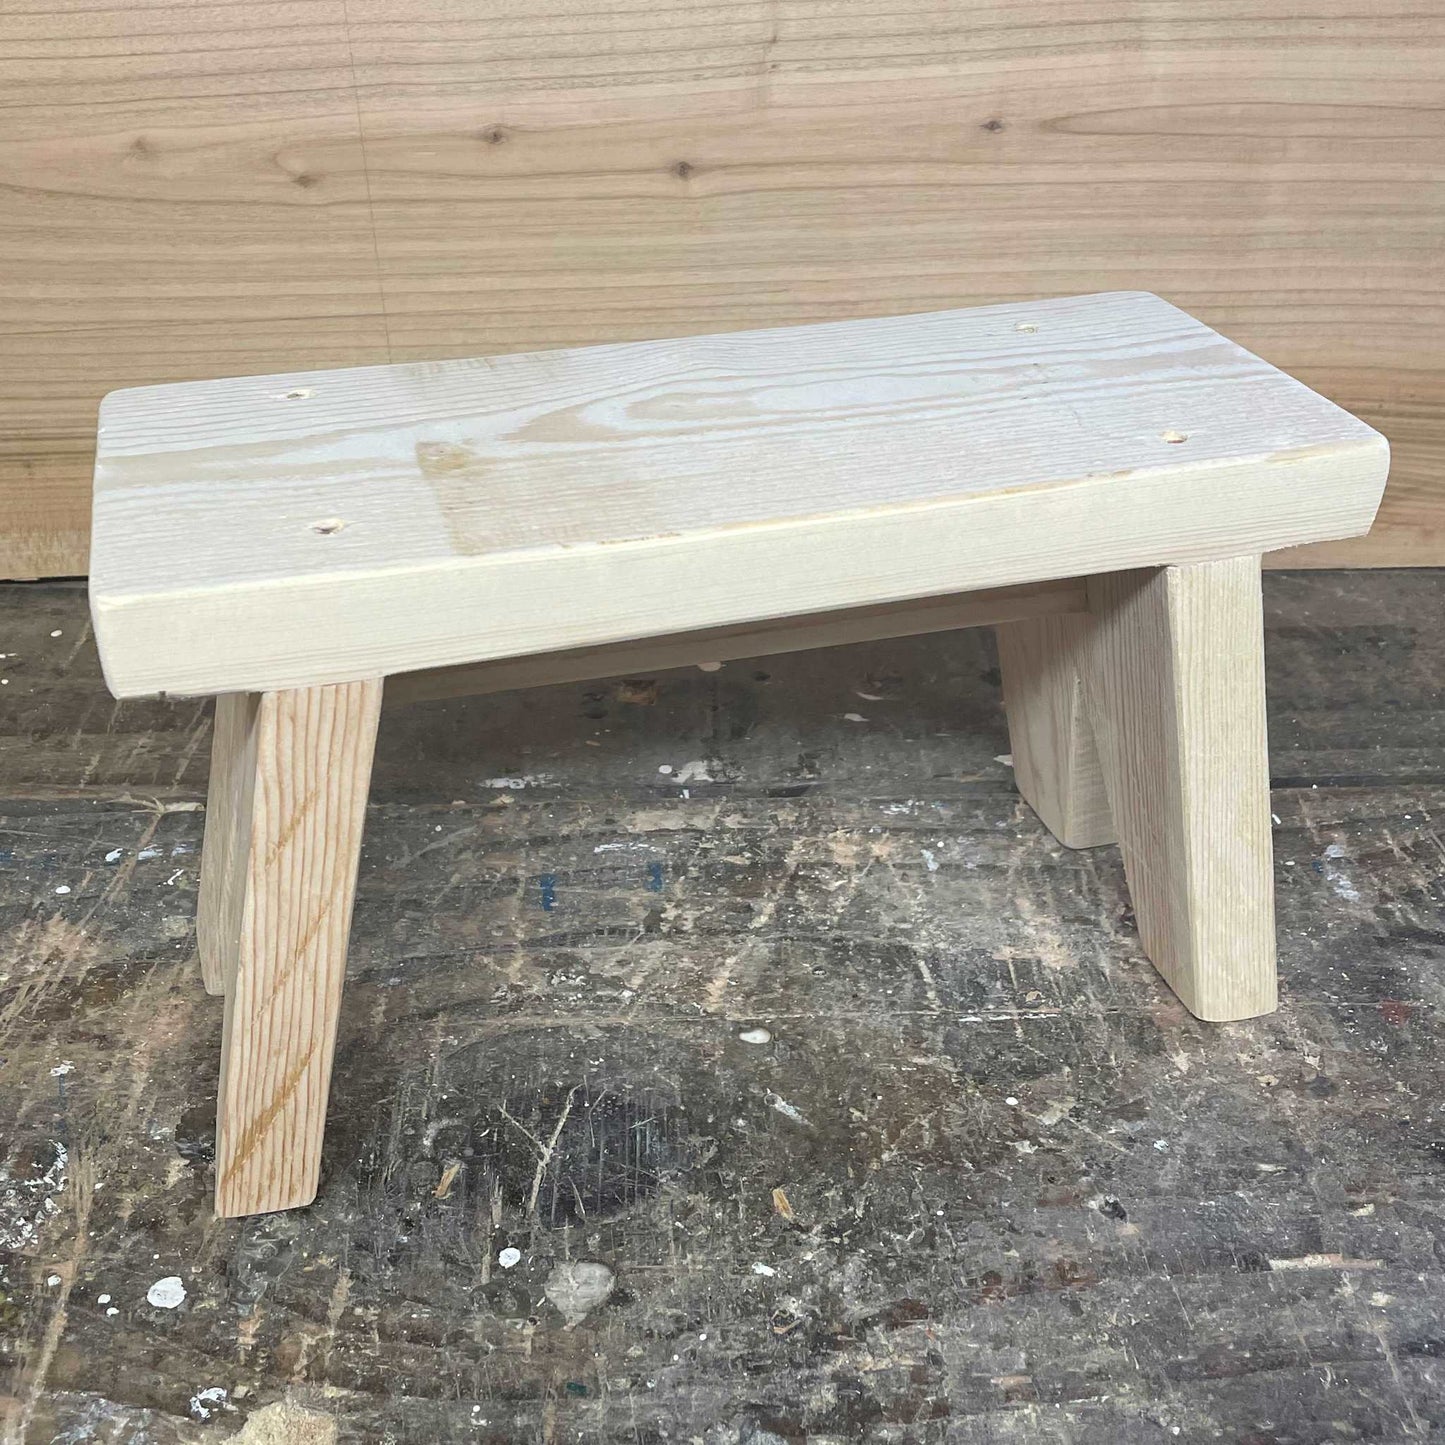 Handmade wooden stool.